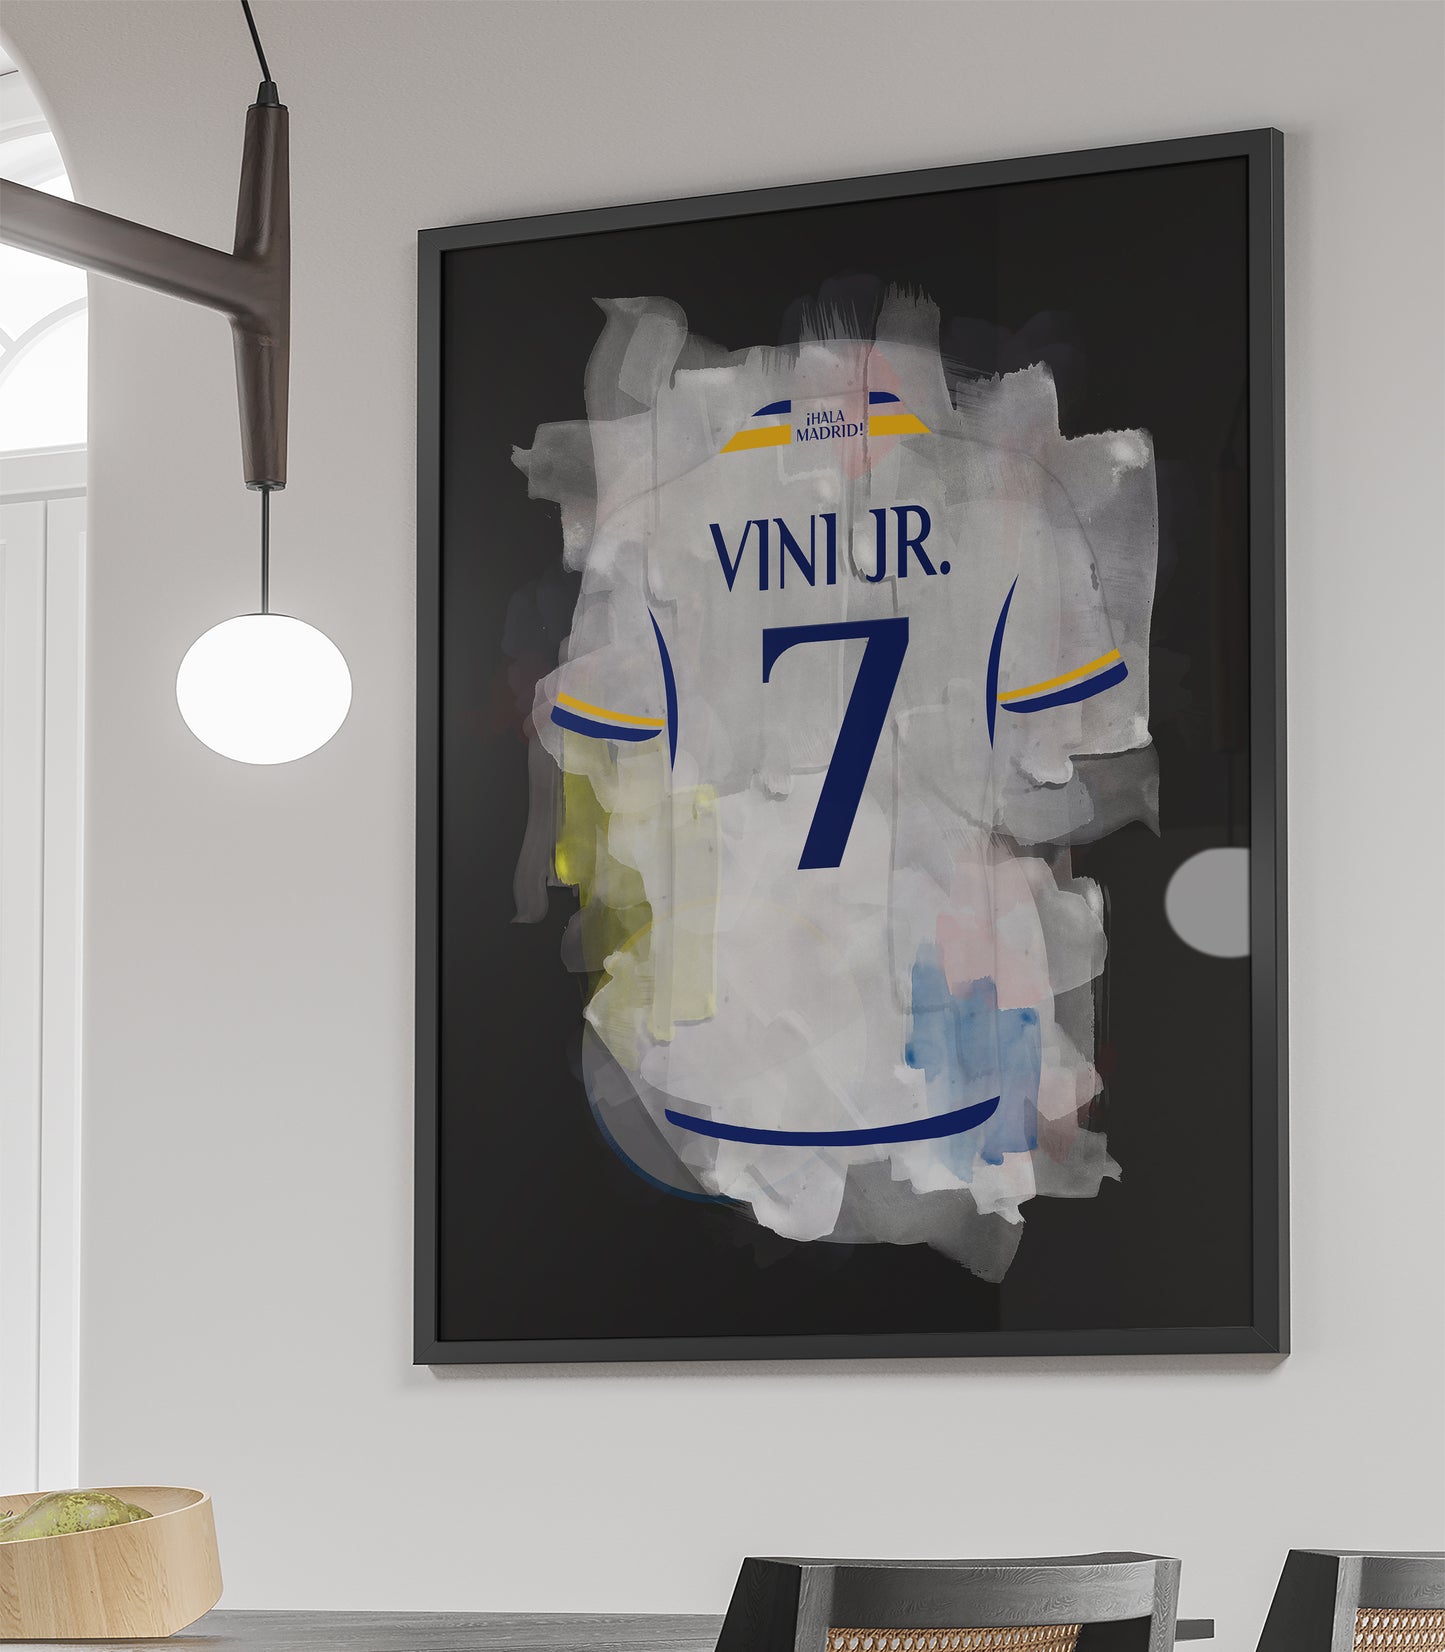 Vinicius Jr voetbalpos